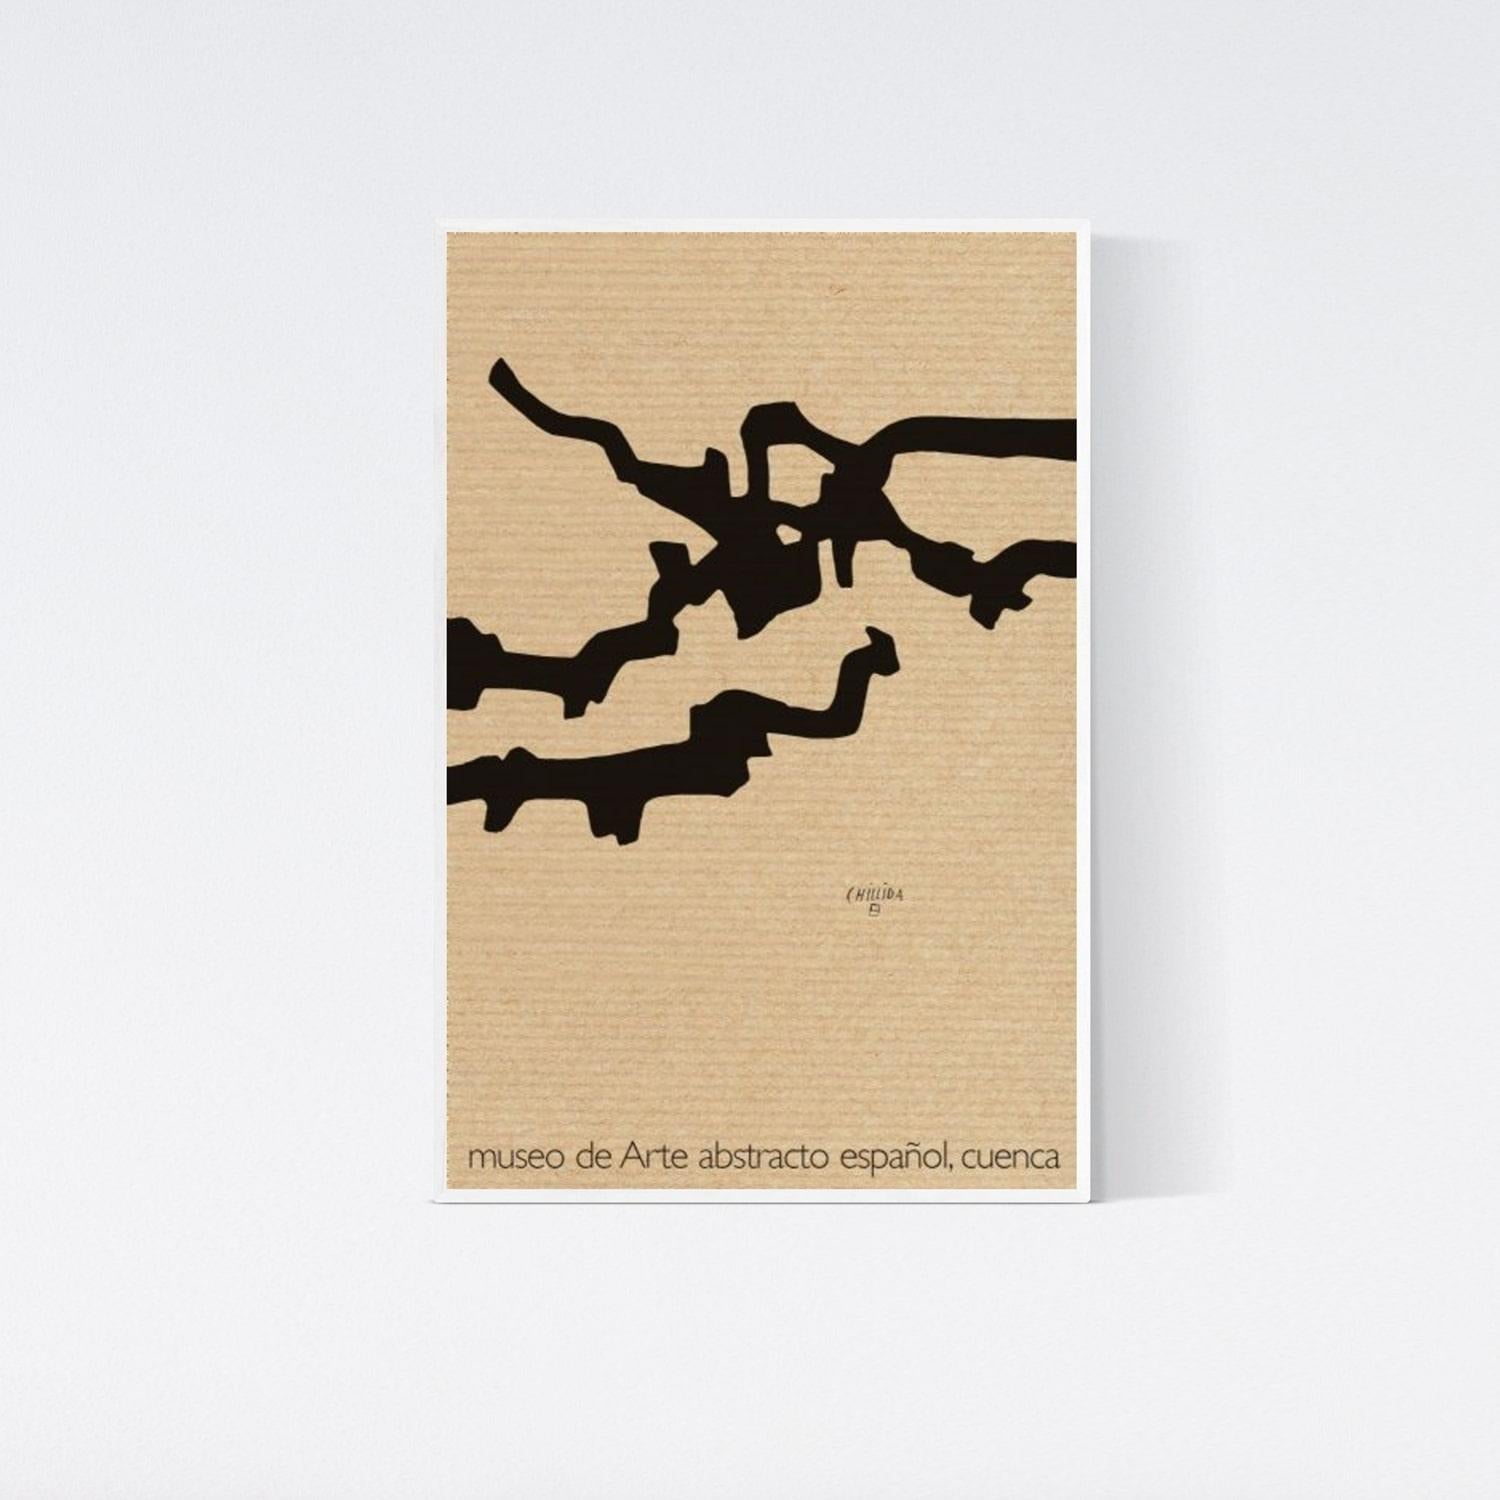 Lithography Exhibition Poster Vintage Black Minimal Geometric - Print by Eduardo Chillida